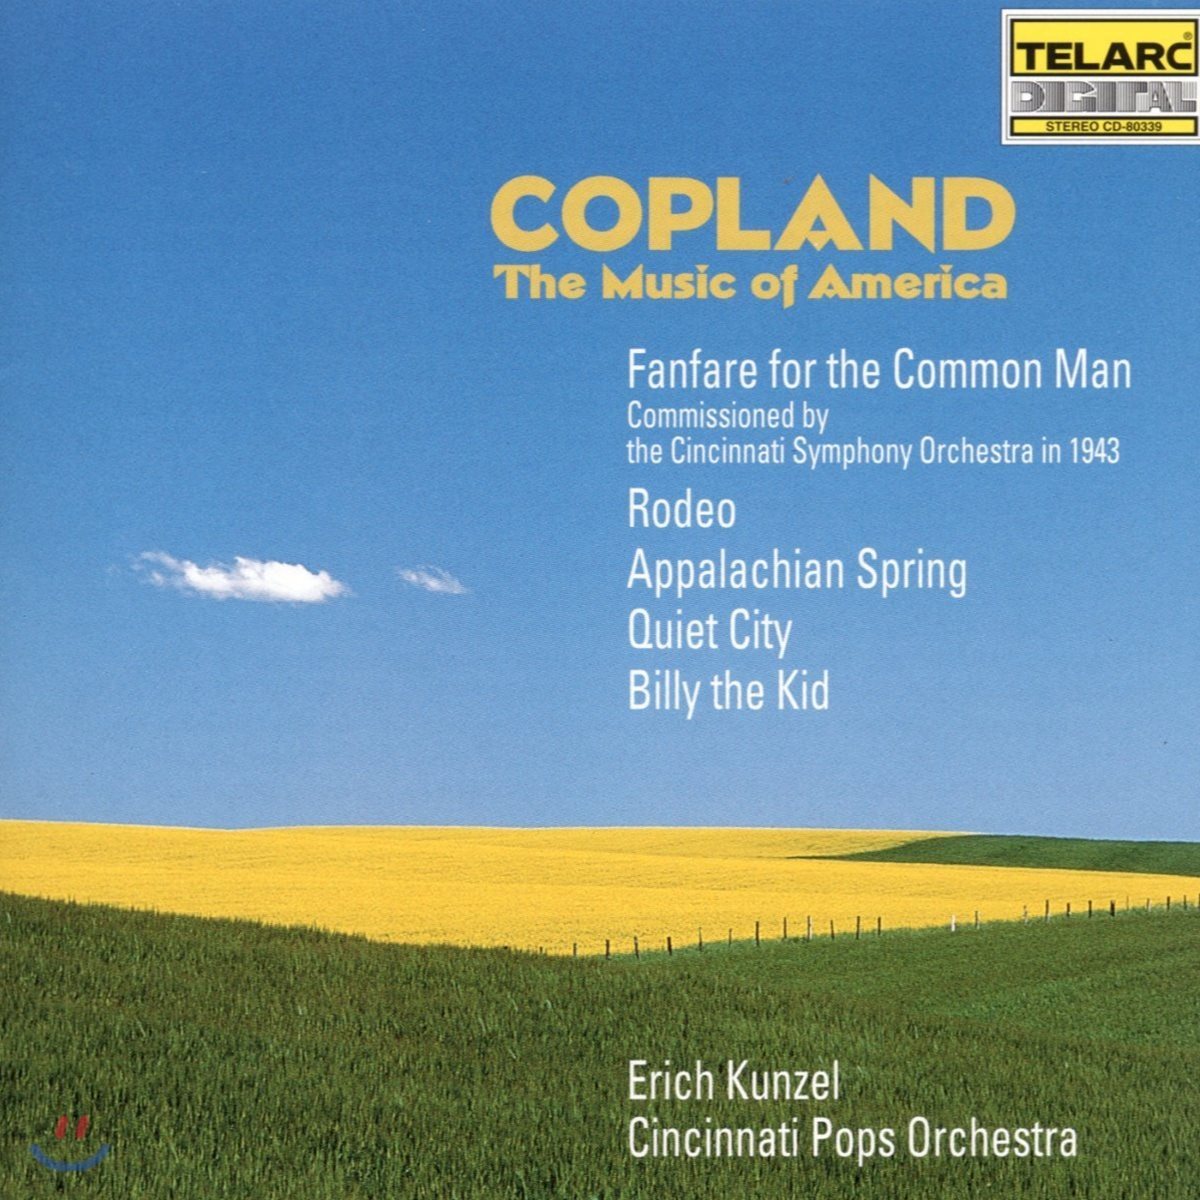 Erich Kunzel 코플랜드: 아메리카의 음악 - 에리히 쿤젤, 신시내티 팝스 오케스트라 (Copland: The Music of America - Fanfare for the Common Man, Appalachian Spring, Billy the Kid)